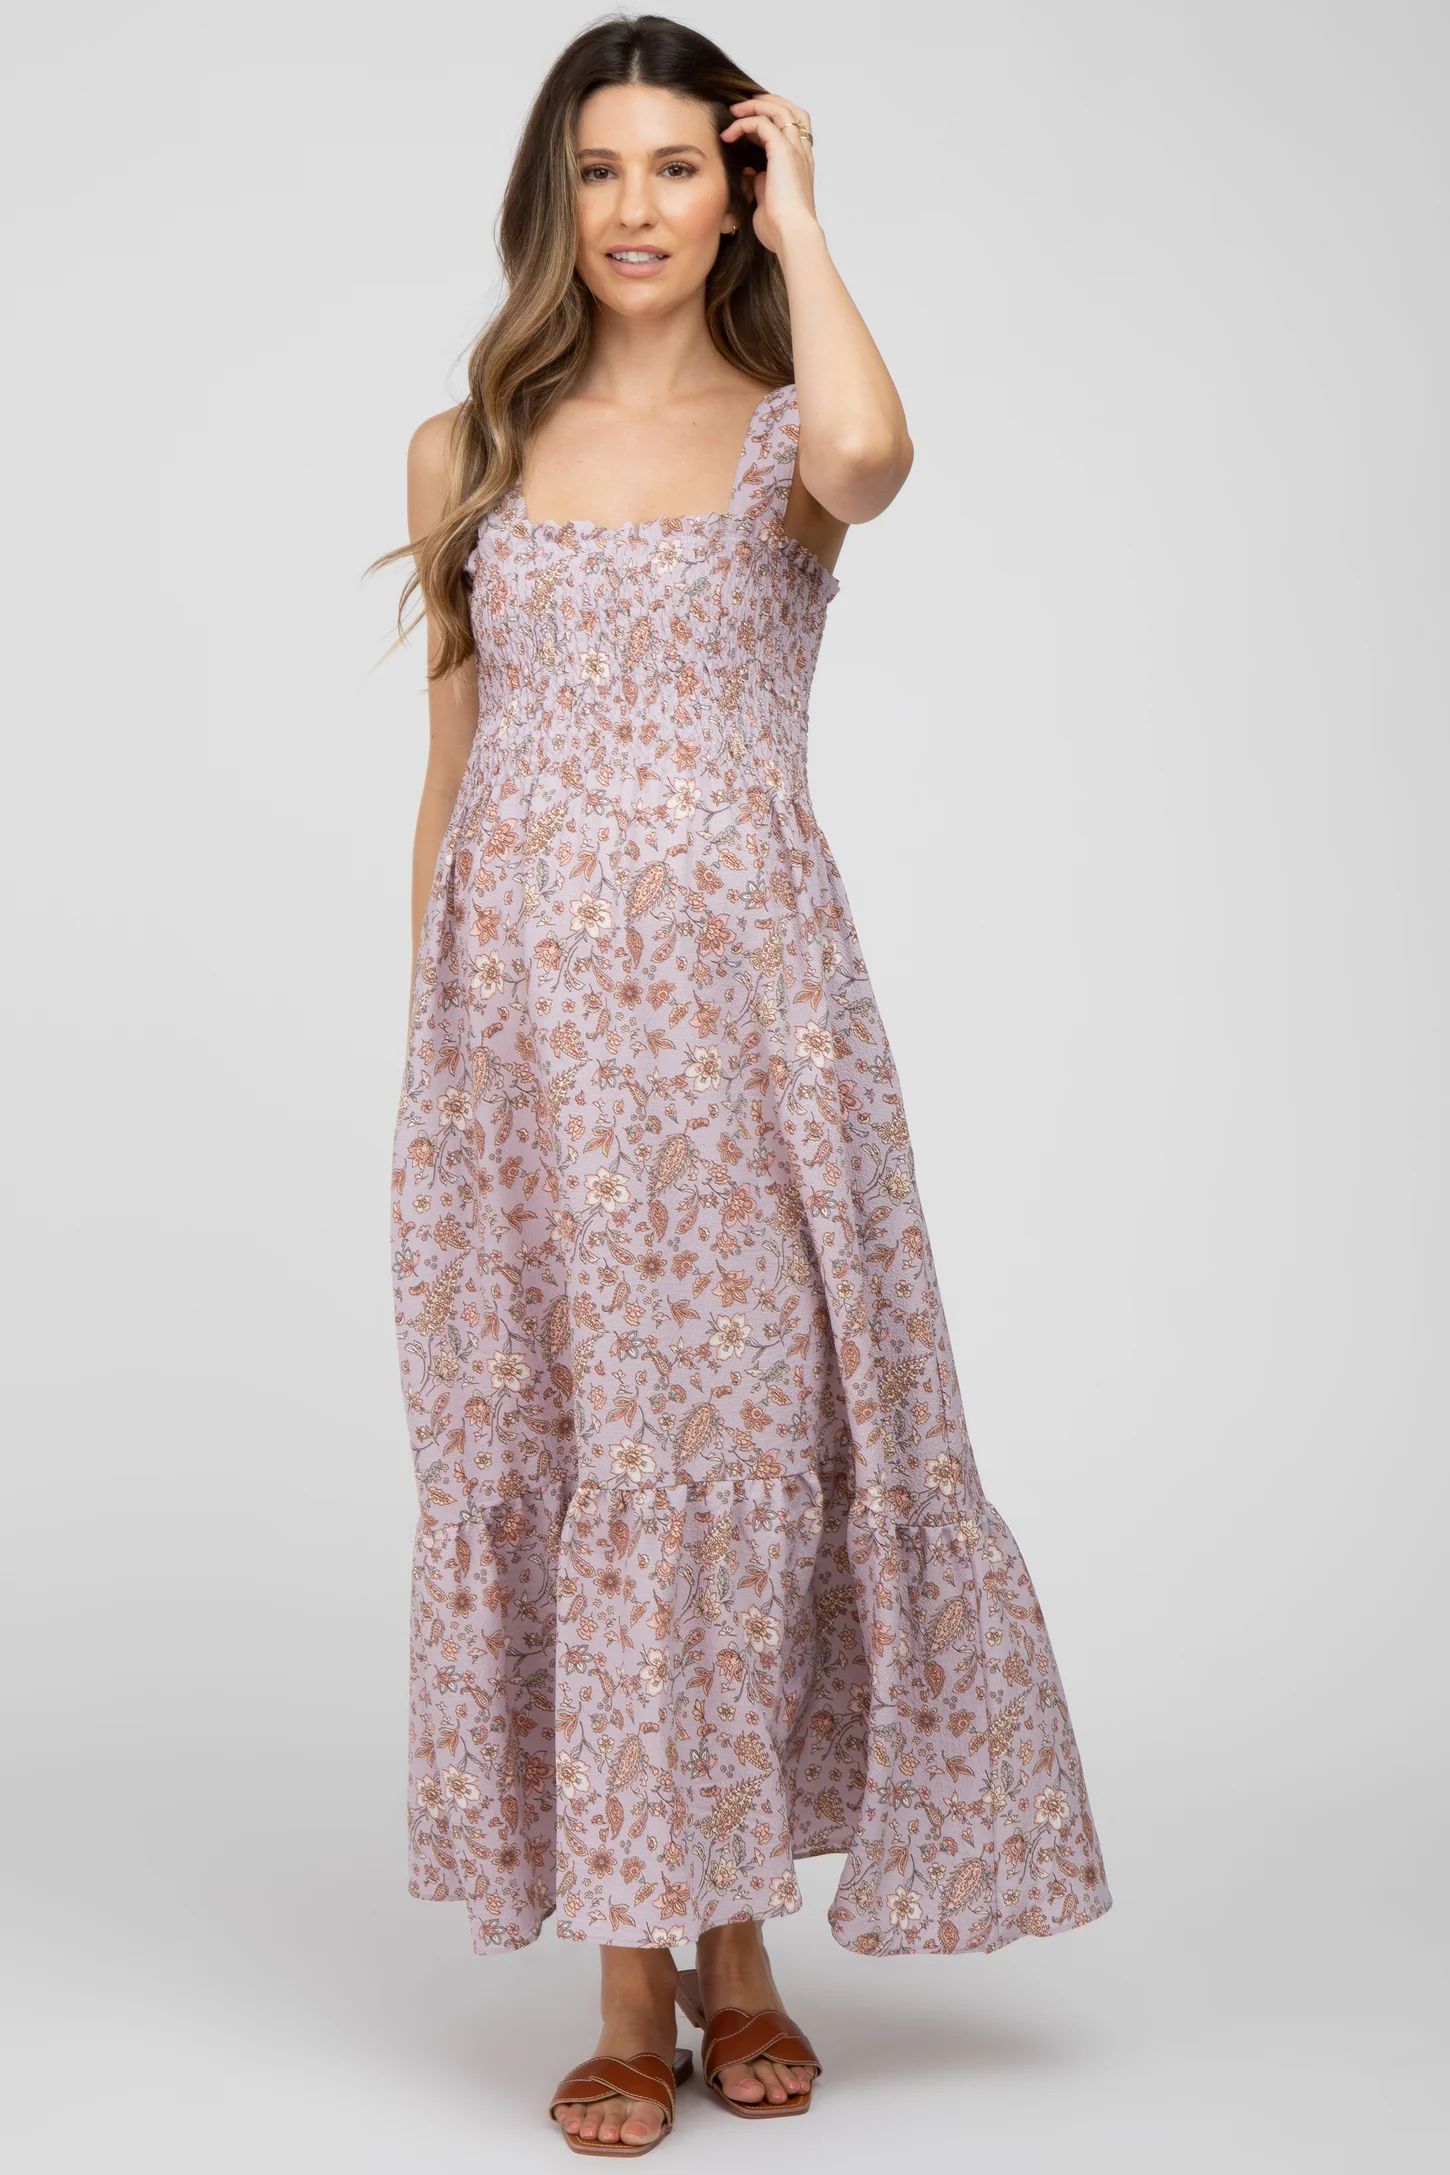 Lavender Smocked Floral Maternity Maxi Dress | PinkBlush Maternity